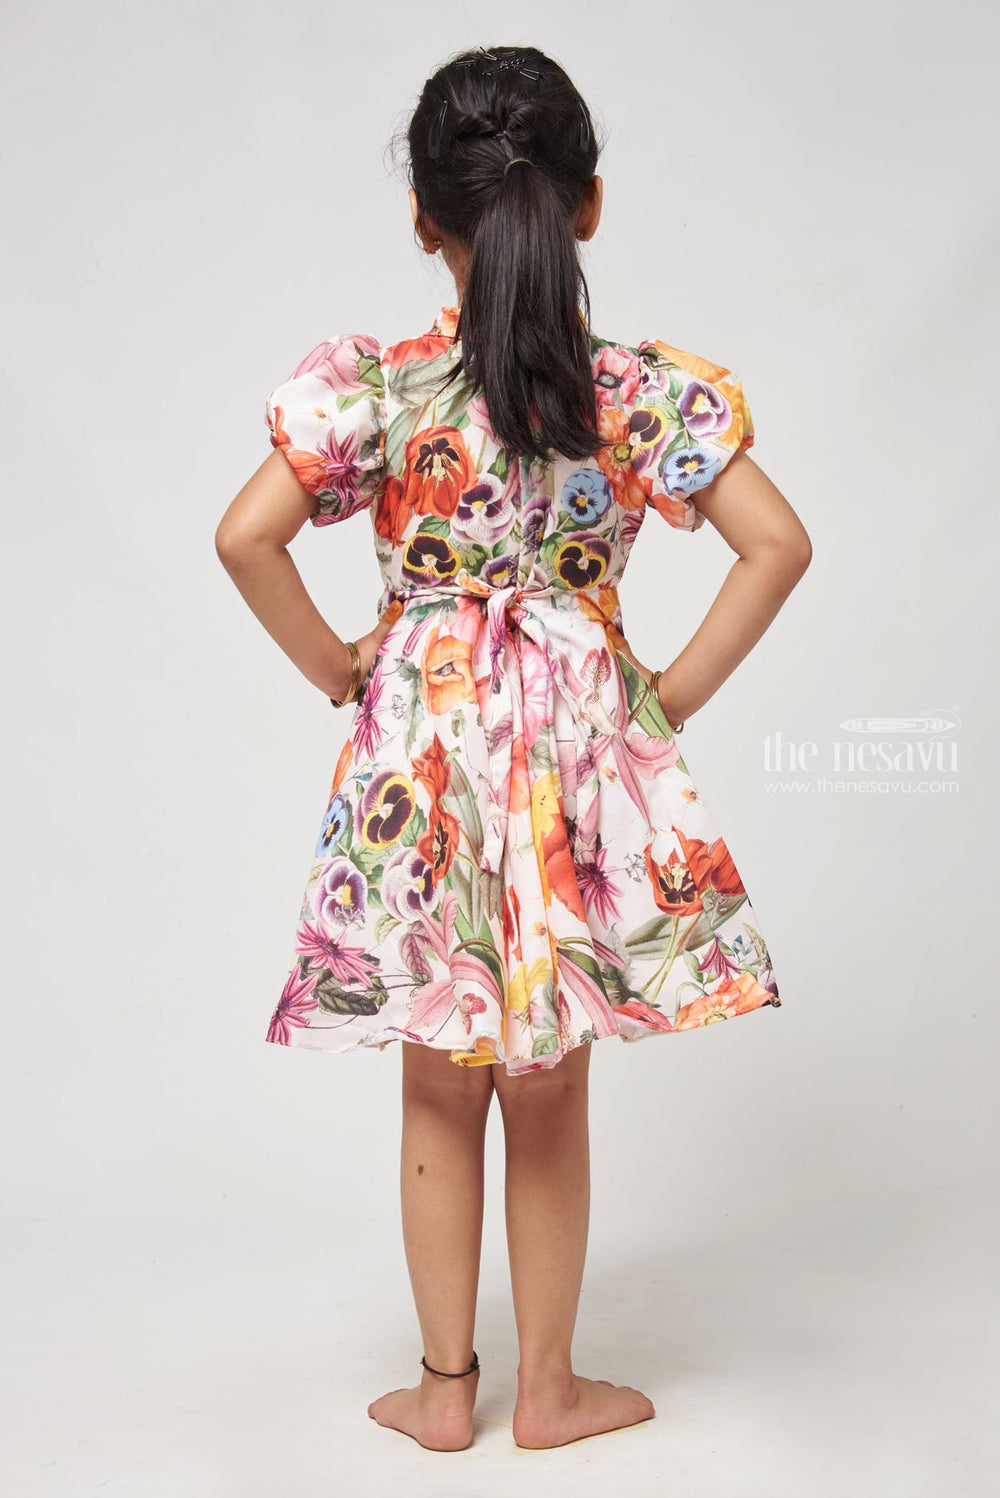 The Nesavu Girls Fancy Frock Swirl-Worthy Chiffon Frock with Beaded Details and Satin Lining Nesavu Boutique Princess Dress: A Blend Of Casual Outing Charm & Regal Grace | The Nesavu